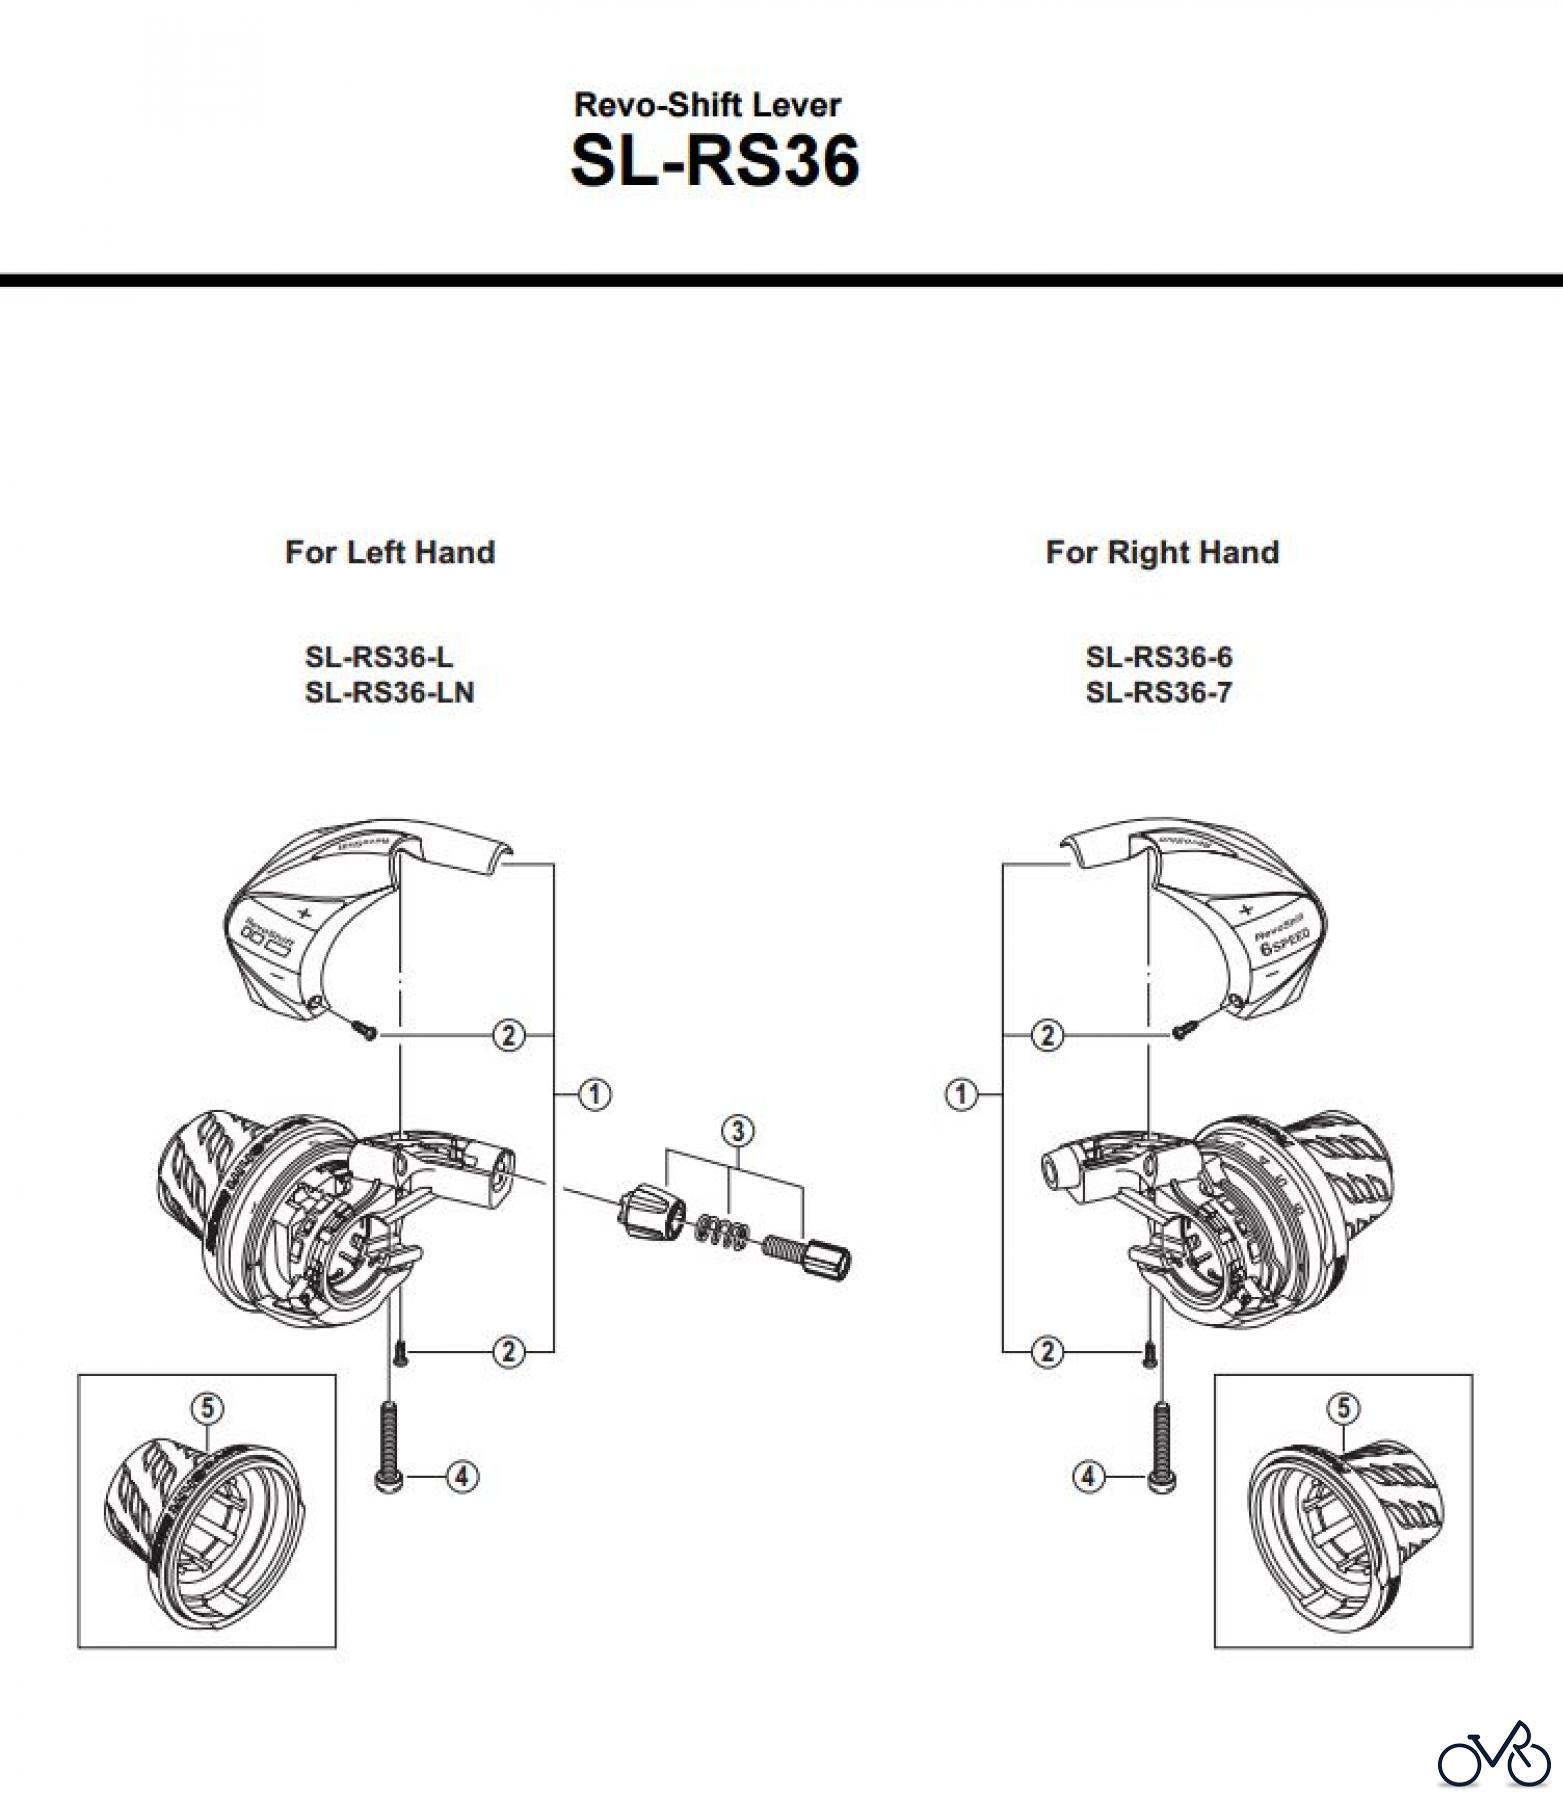  Shimano SL Shift Lever - Schalthebel SL-RS36 -3294A  Revo-Shift Lever